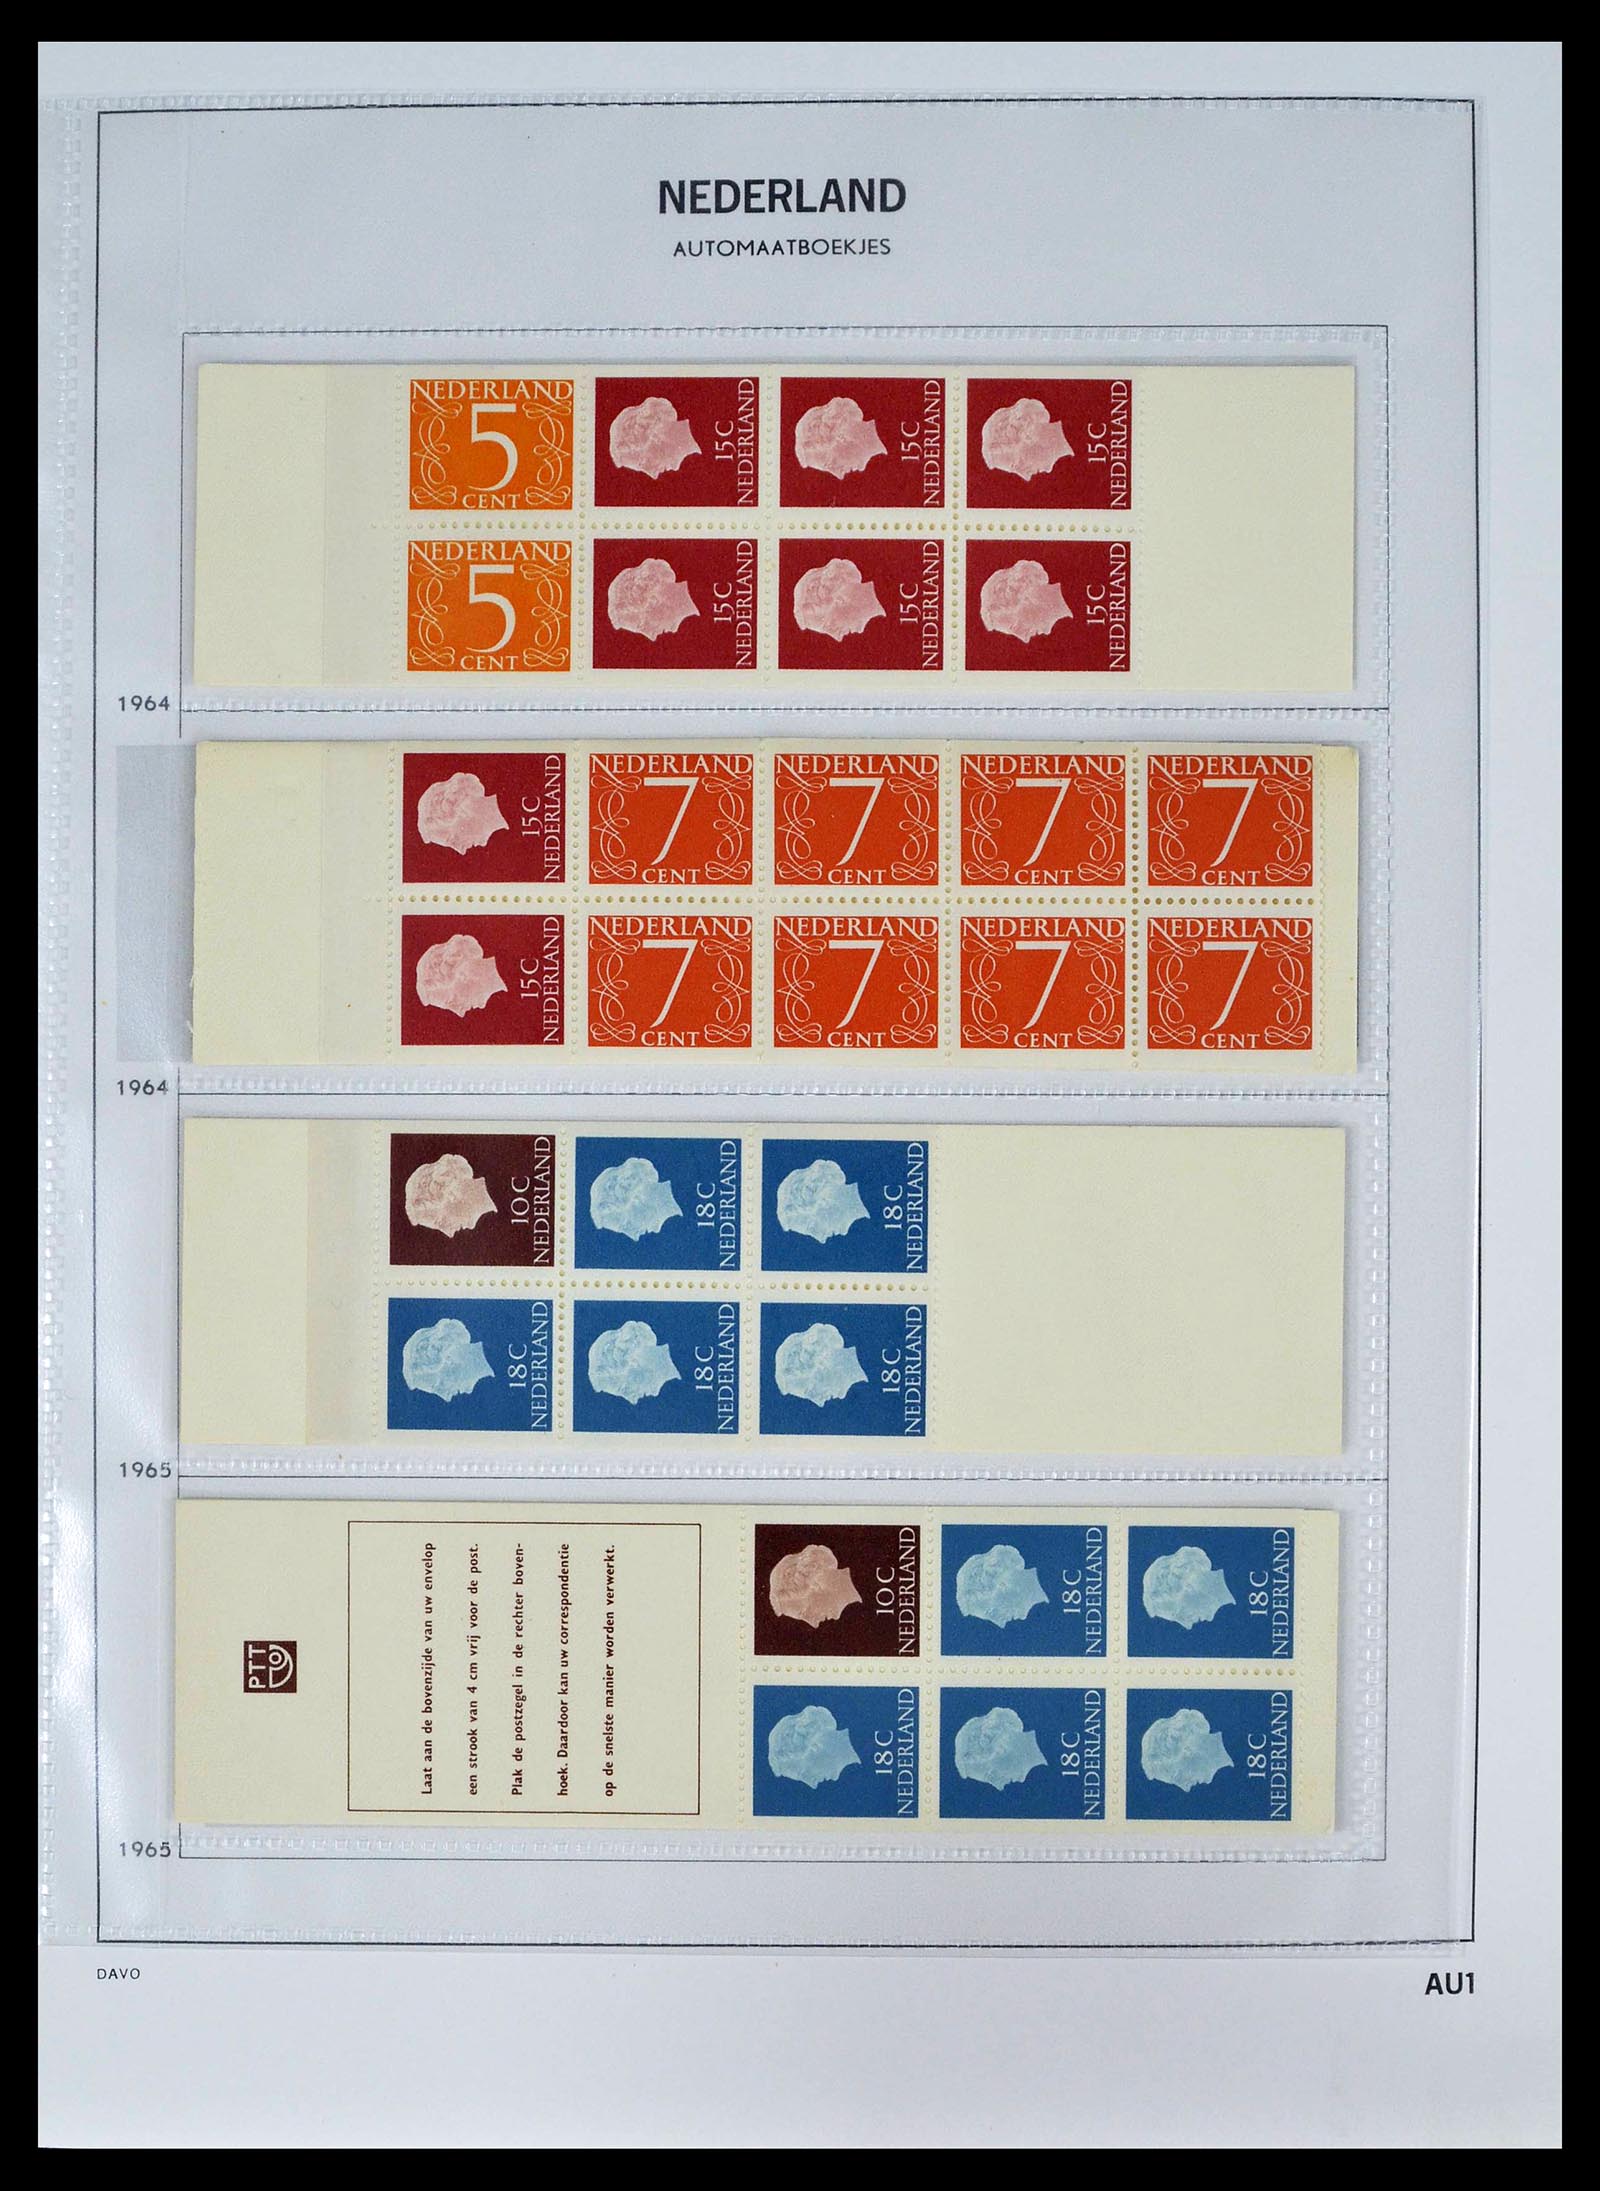 39362 0001 - Stamp collection 39362 Netherlands stamp booklets 1964-2003.